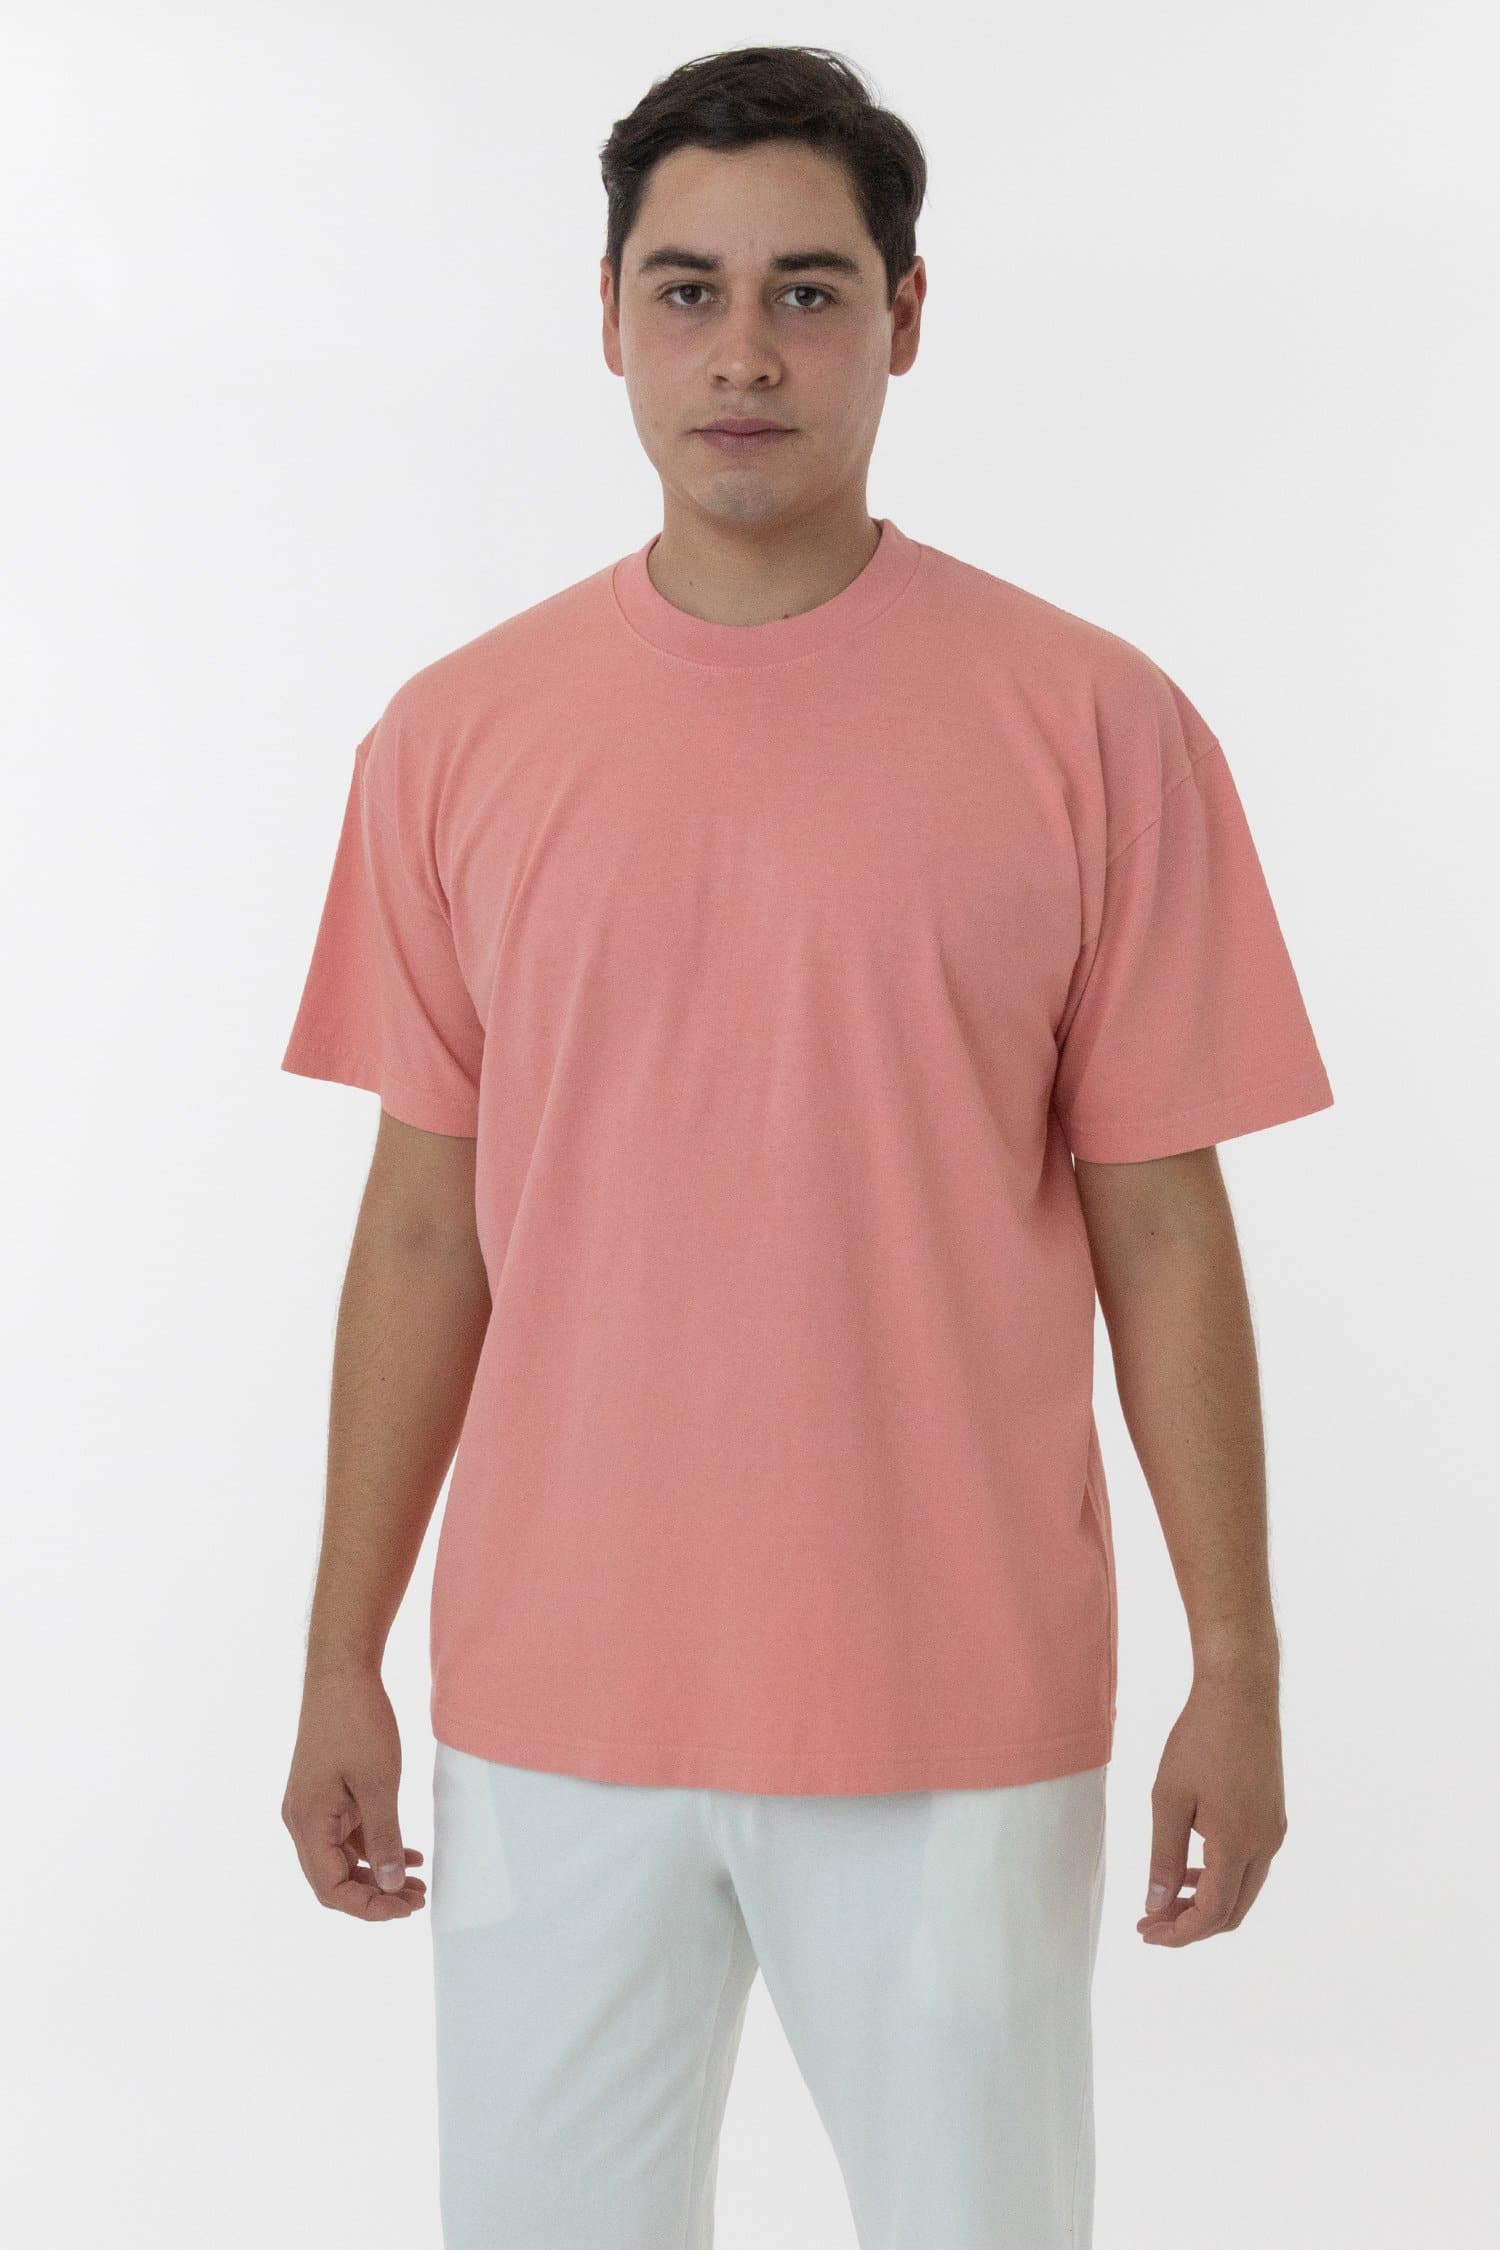 LA Apparel Garment Dye Crew Neck T-Shirt Canadian Custom Apparel